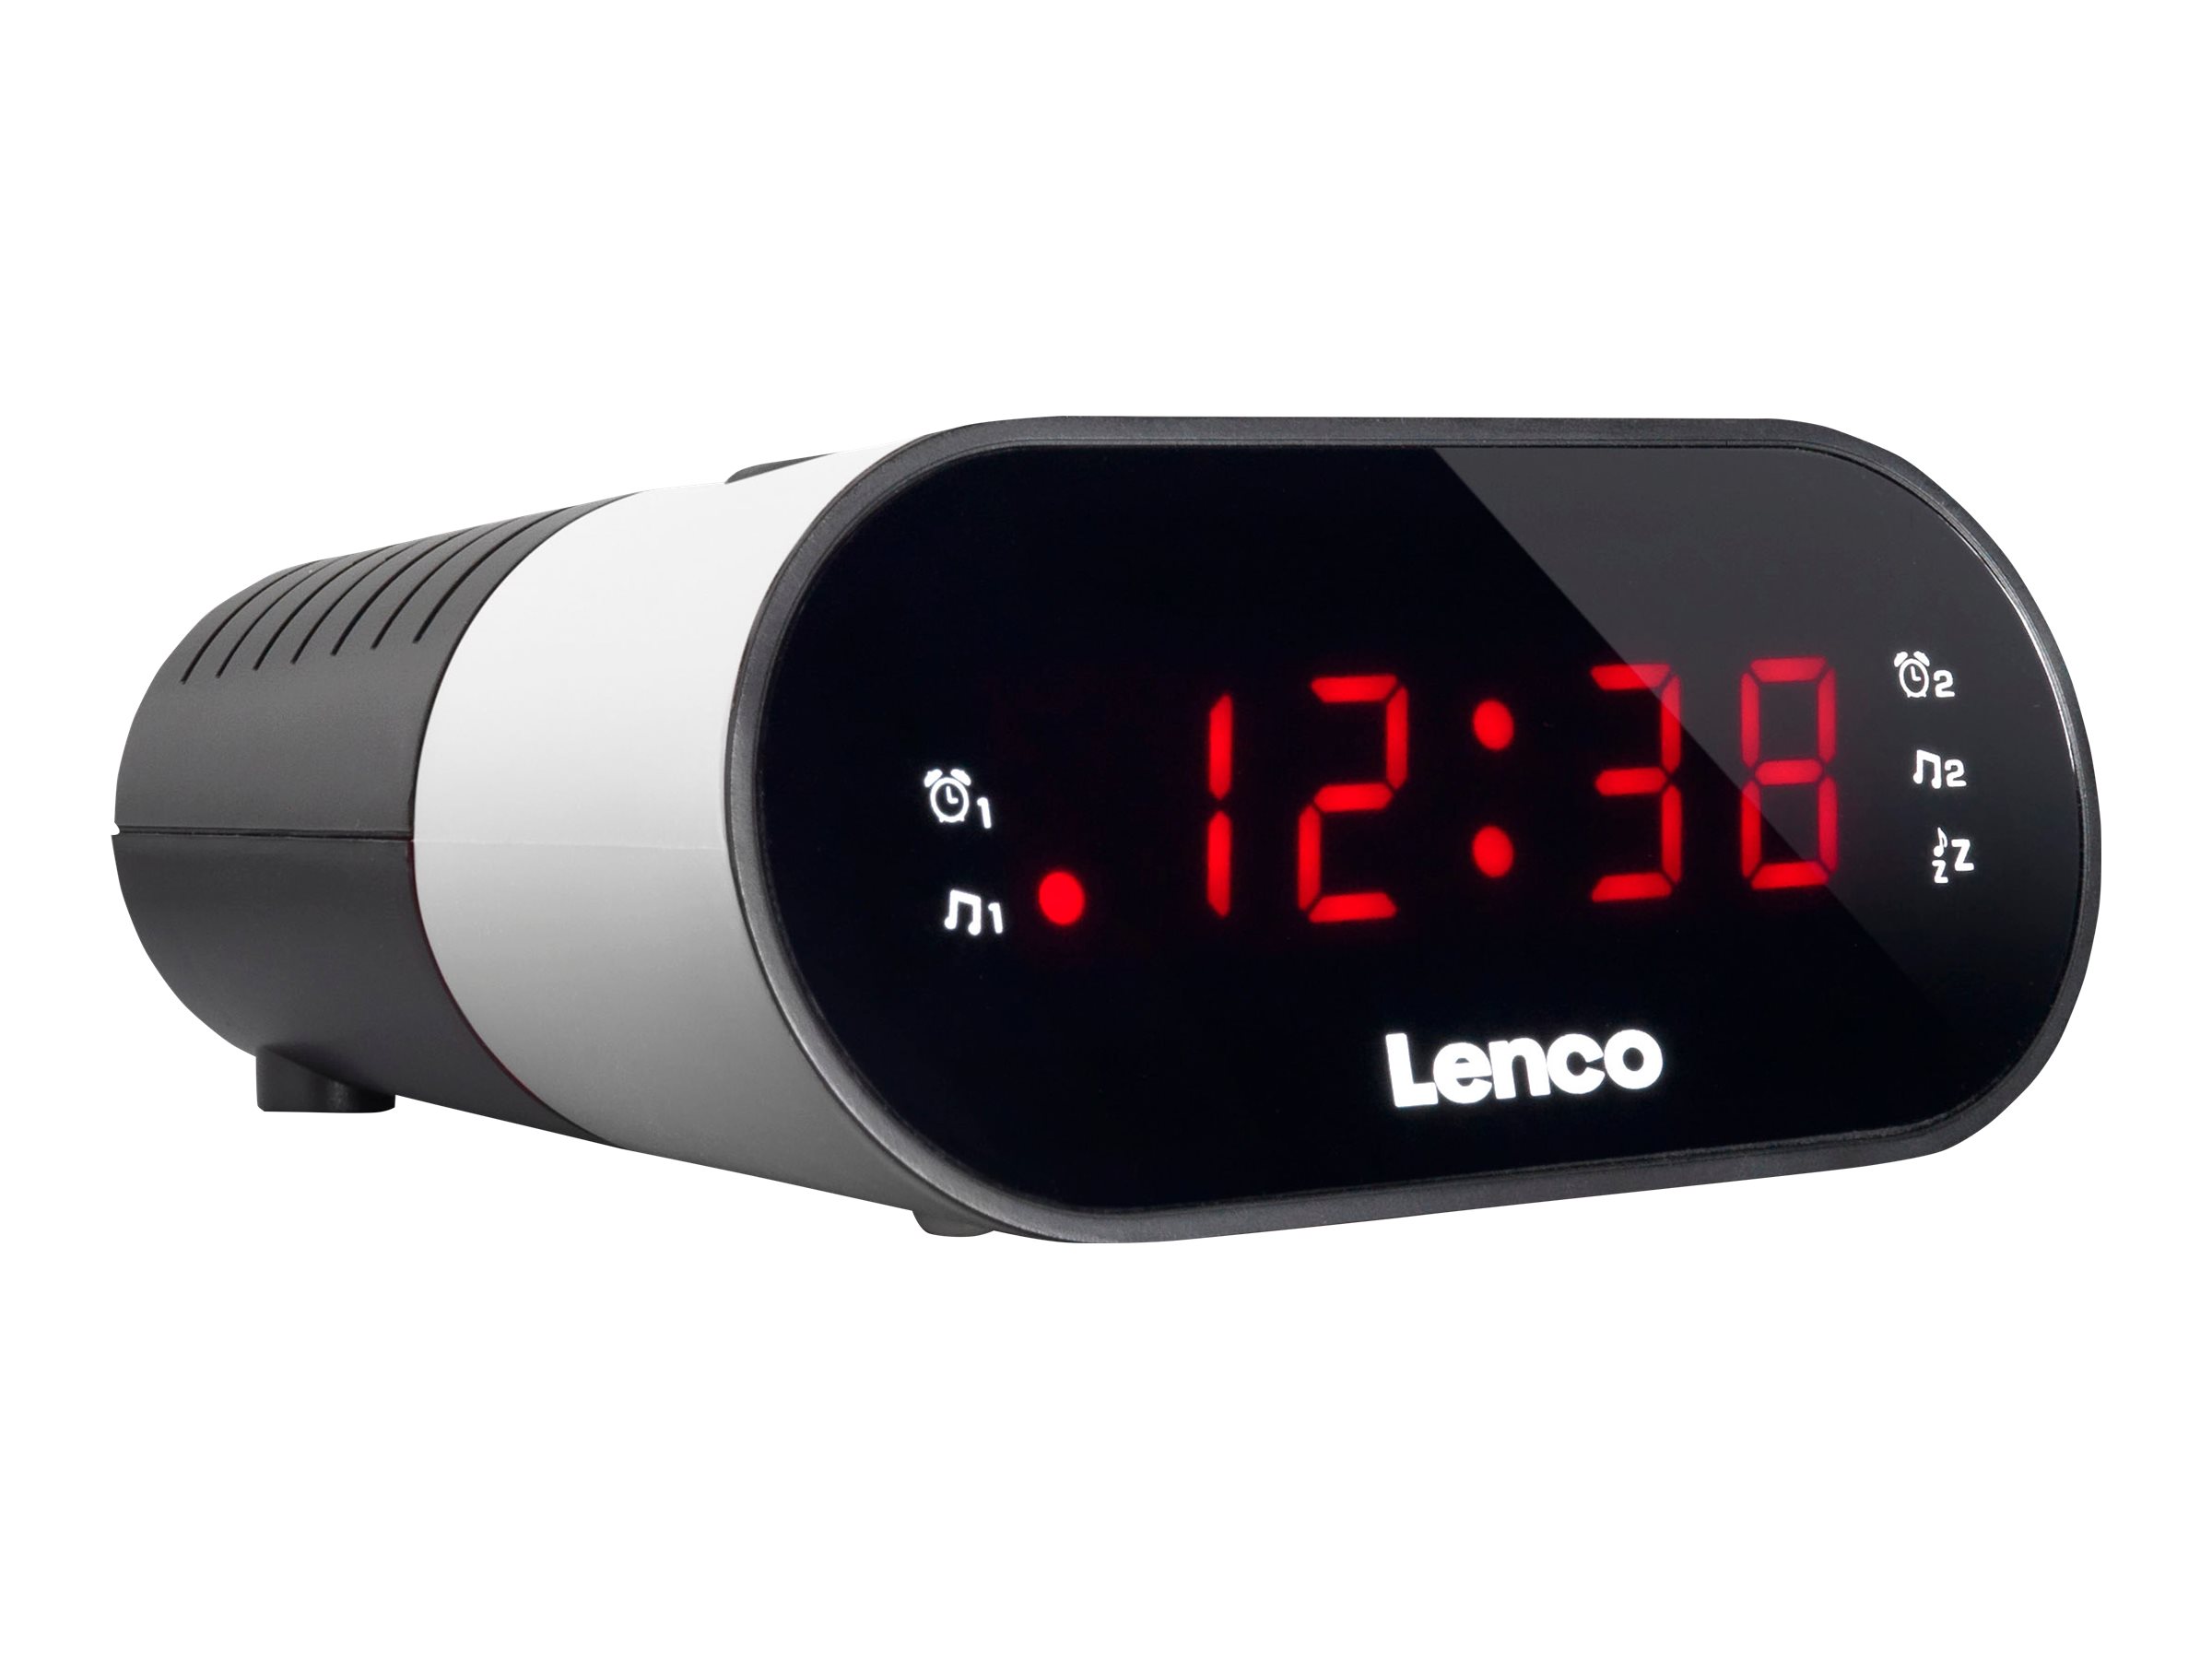 Lenco CR-07 Uhren-Radio (Weiß)